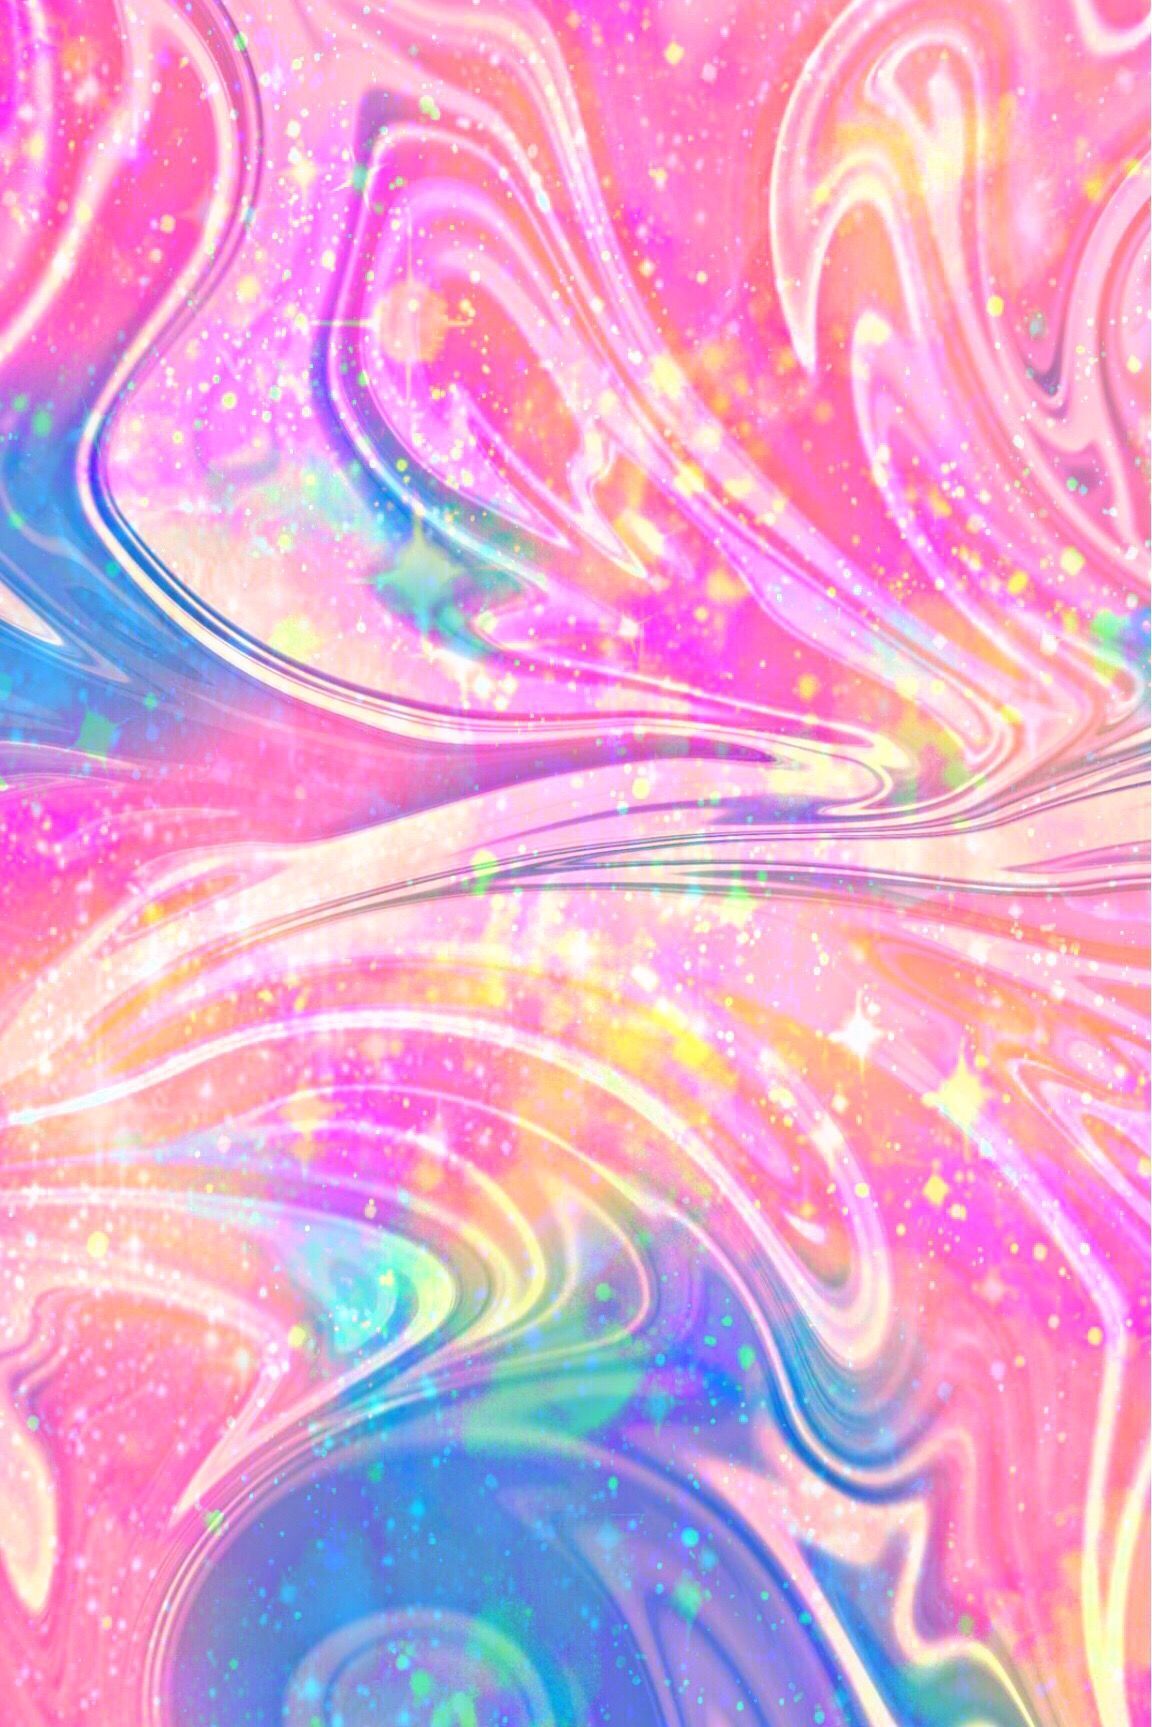 Strawberry Cream Galaxy Wallpaper #androidwallpaper #iphonewallpaper #bling #glitter #sparkle #galax. Galaxy wallpaper, Rainbow wallpaper, Galaxy wallpaper iphone